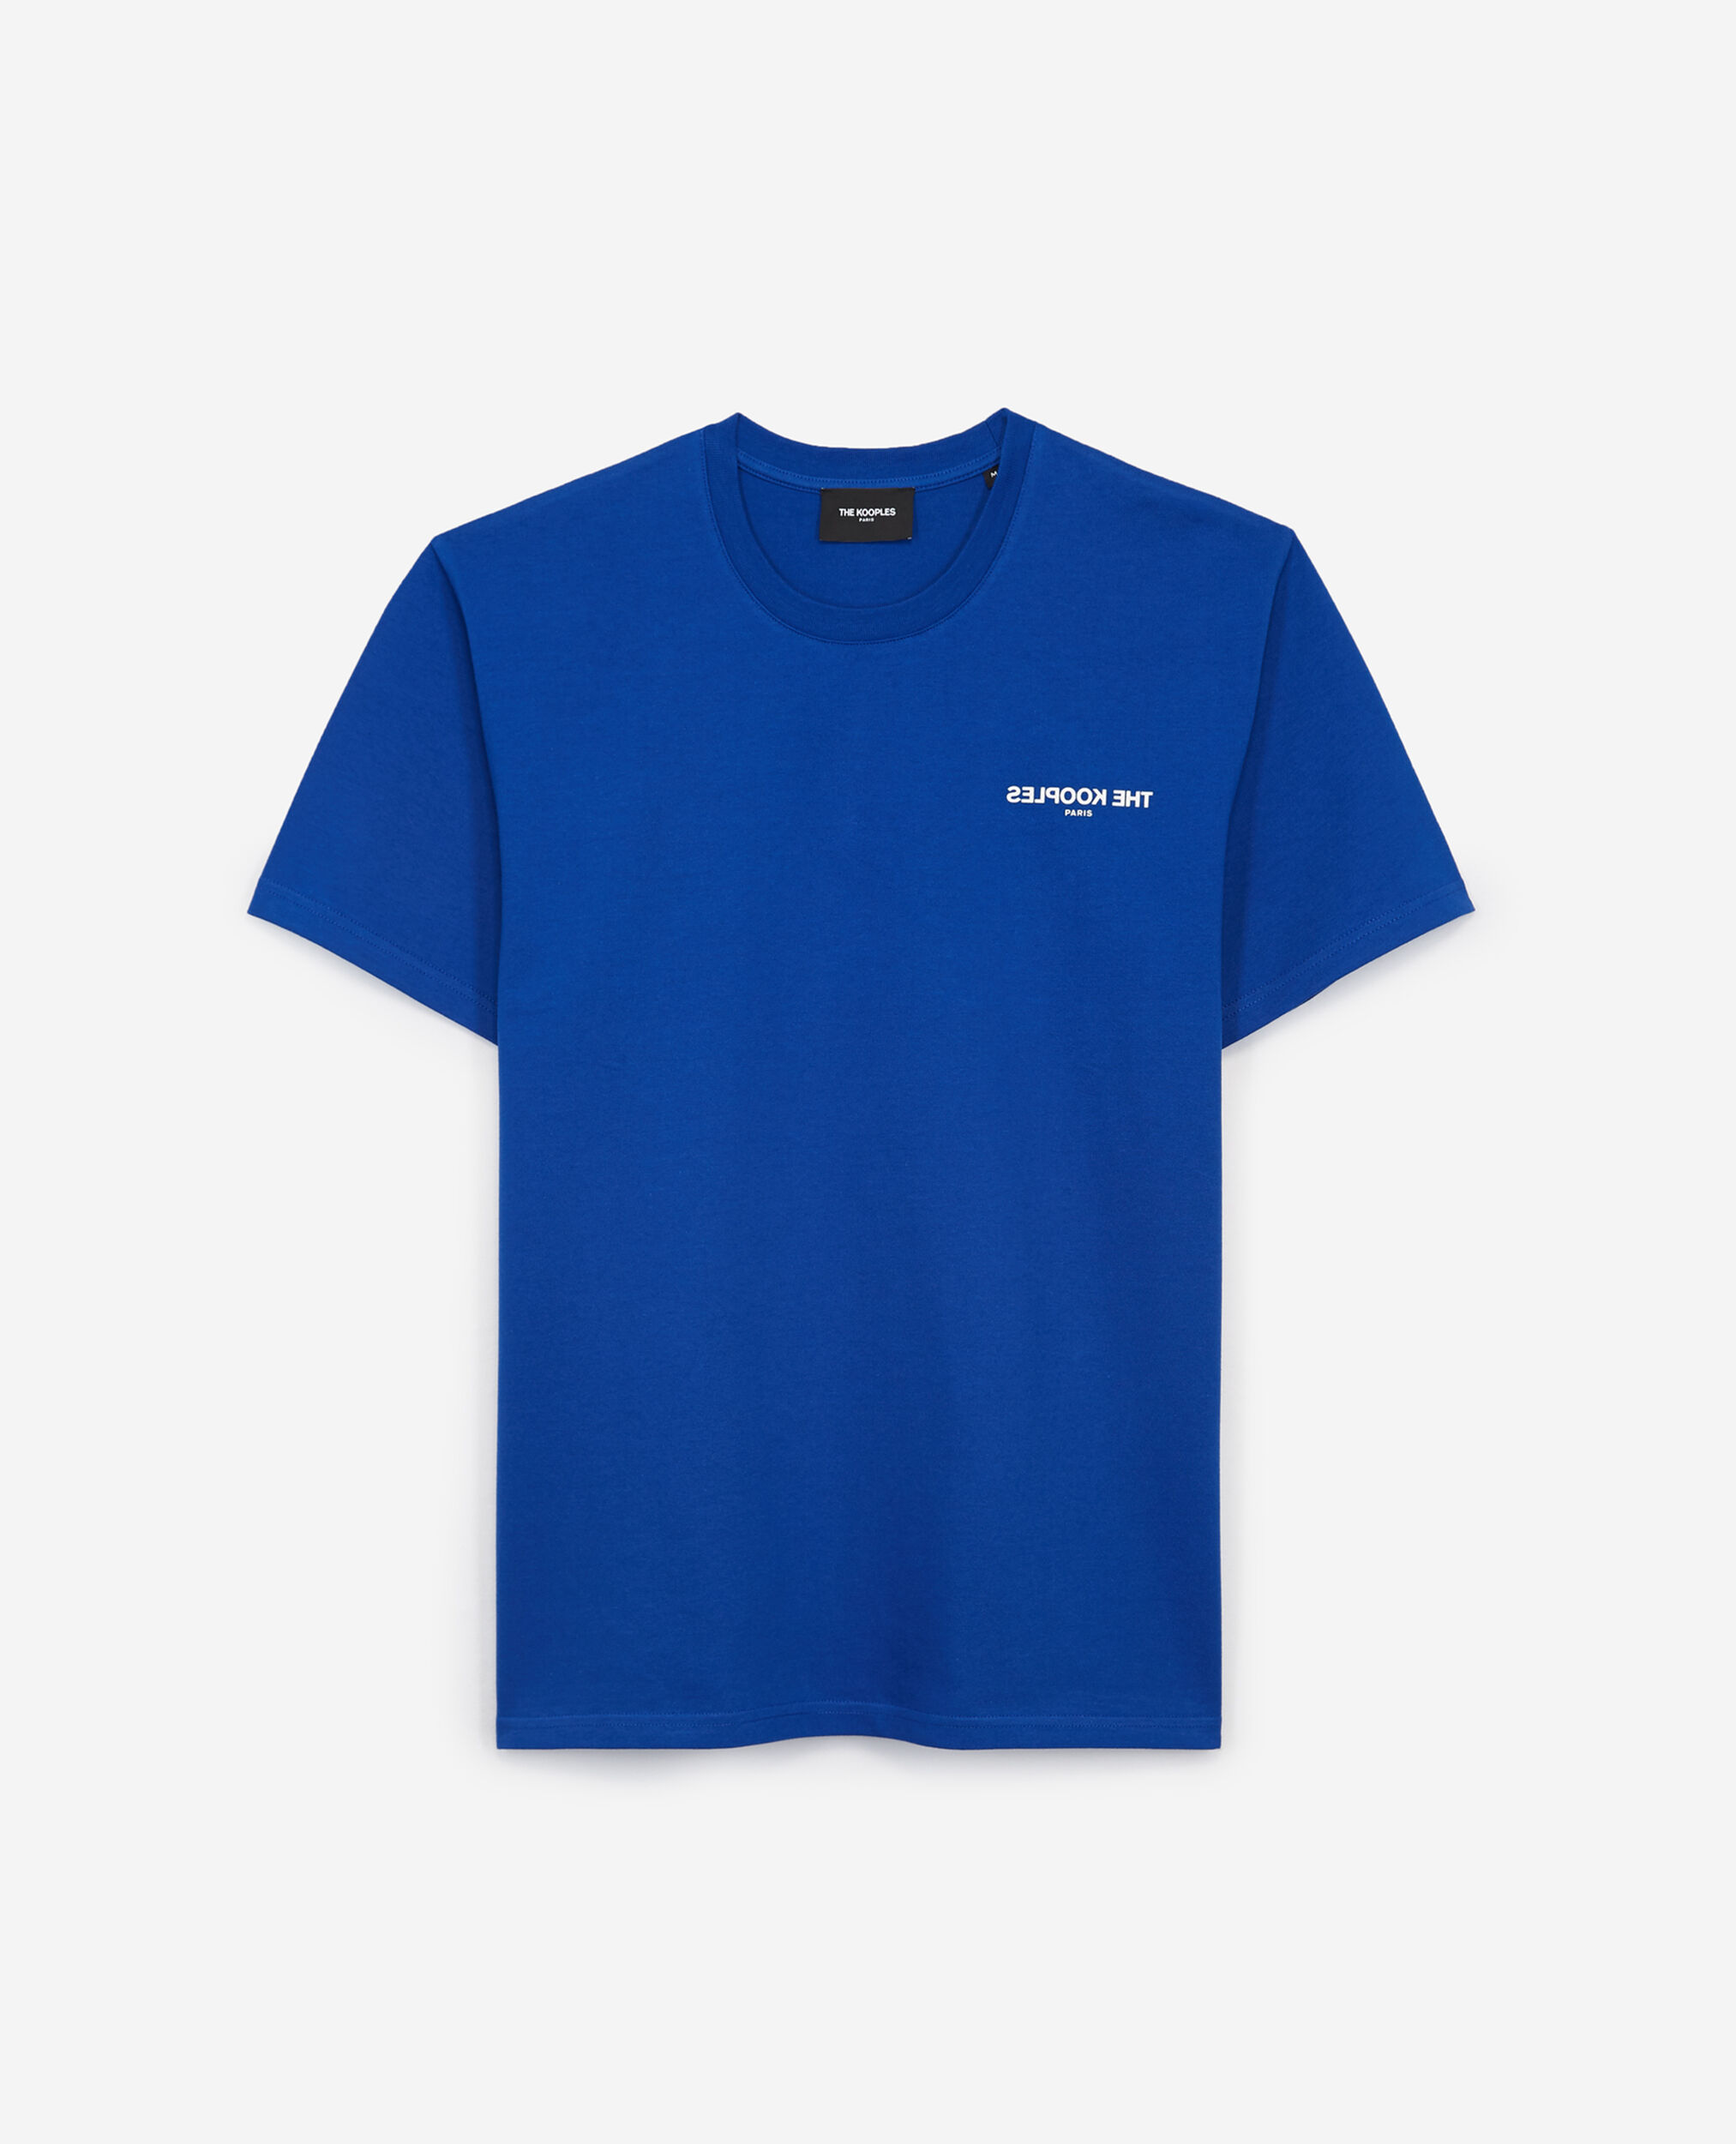 T-shirt coton bleu logo The Kooples, ELECTRIC BLUE, hi-res image number null